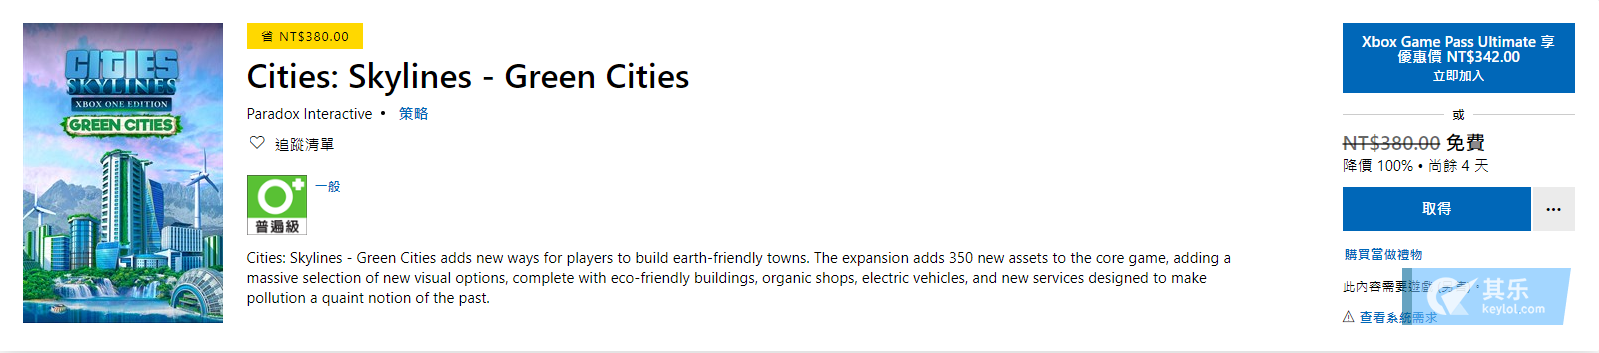 Microsoft 商店 免費領取xbox One 和win 10 版本 Cities Skylines Green Cities Dlc 不需本體 福利放送 其乐keylol 驱动正版游戏的引擎